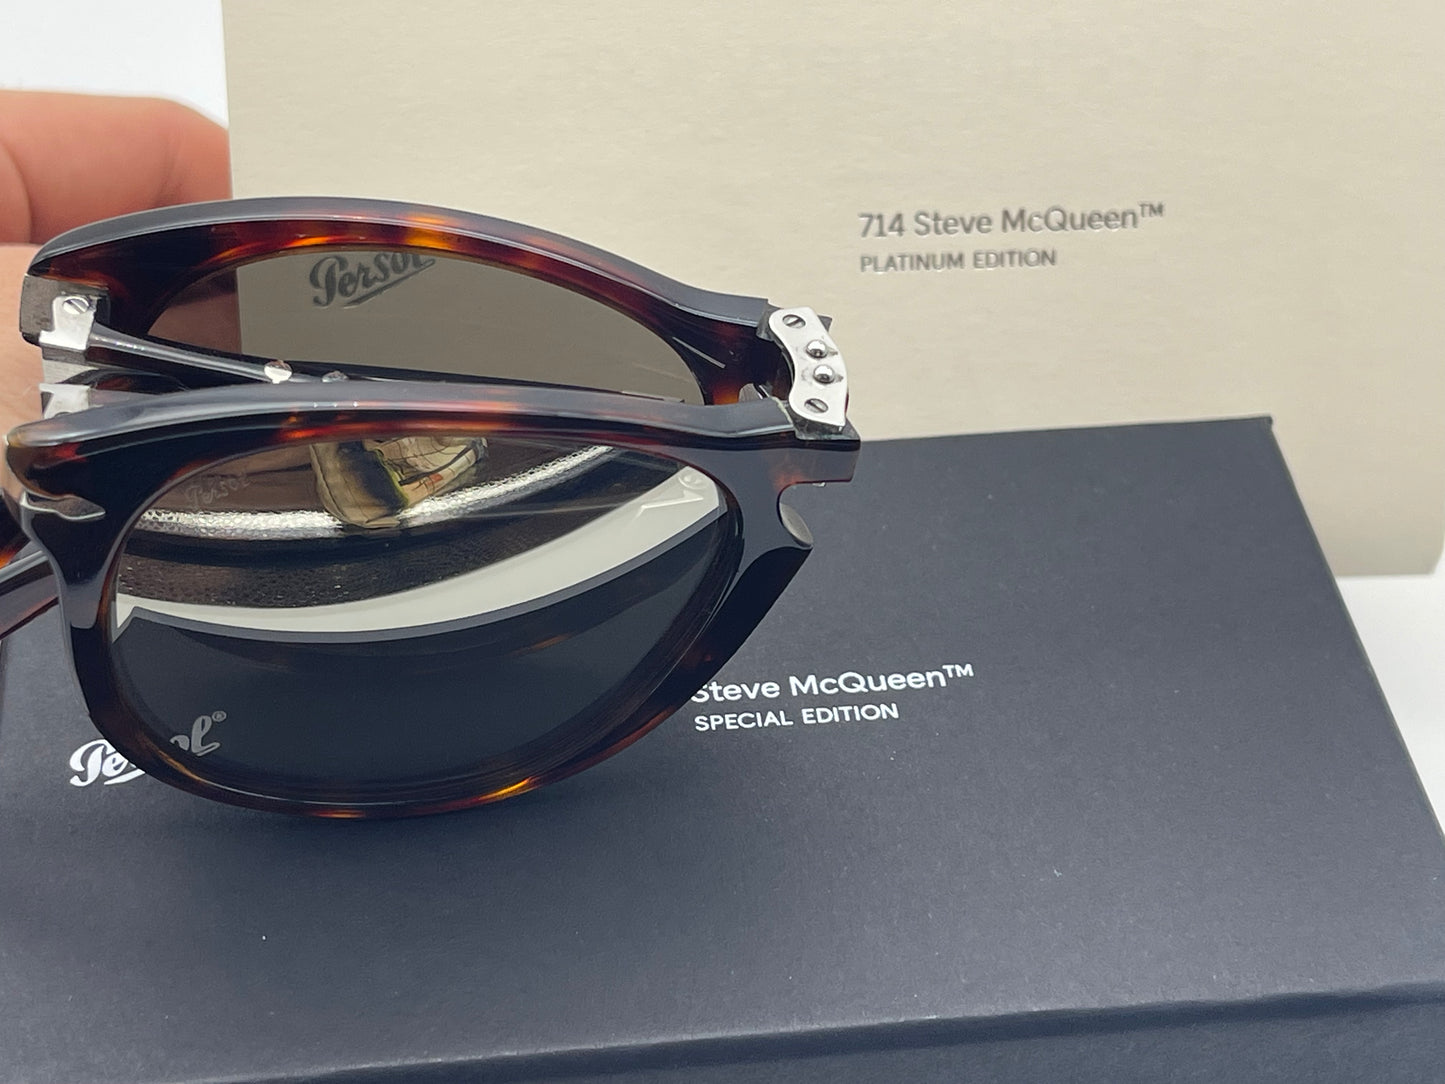 Persol PO 714 SM Steve Mcqueen Platinum Limited Edition 24/AP Havana Sunglasses